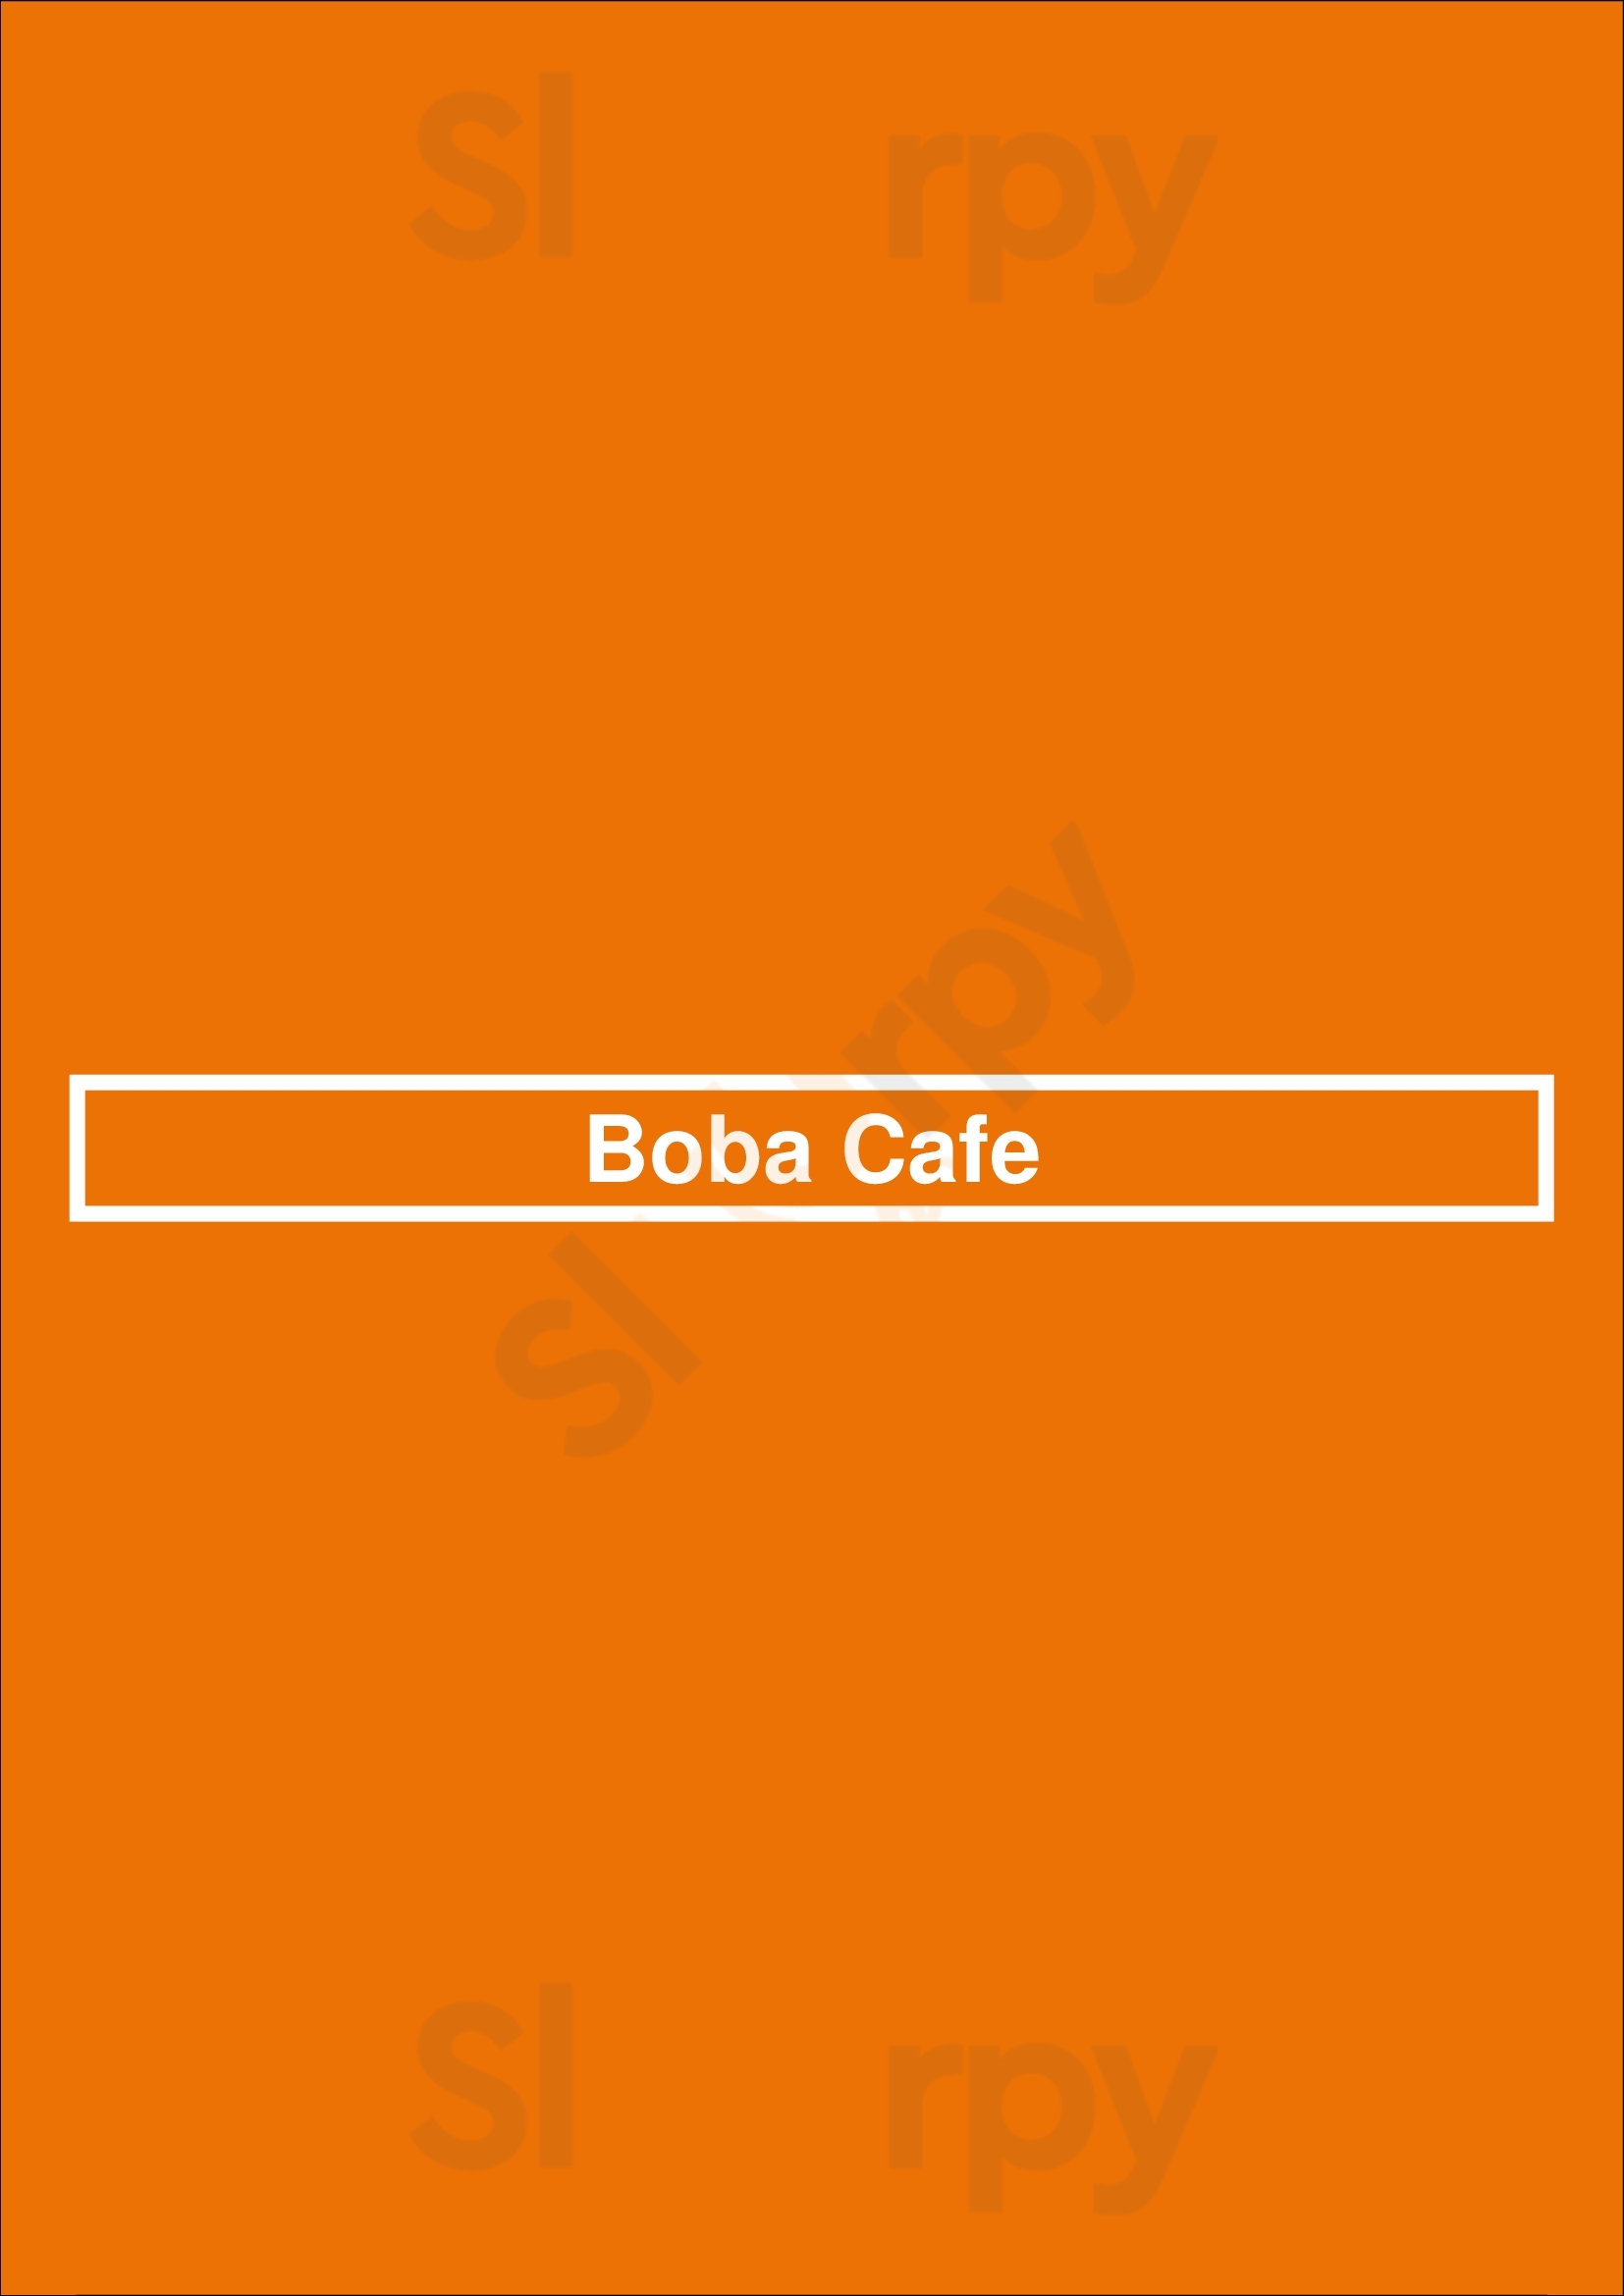 Boba Cafe Houston Menu - 1